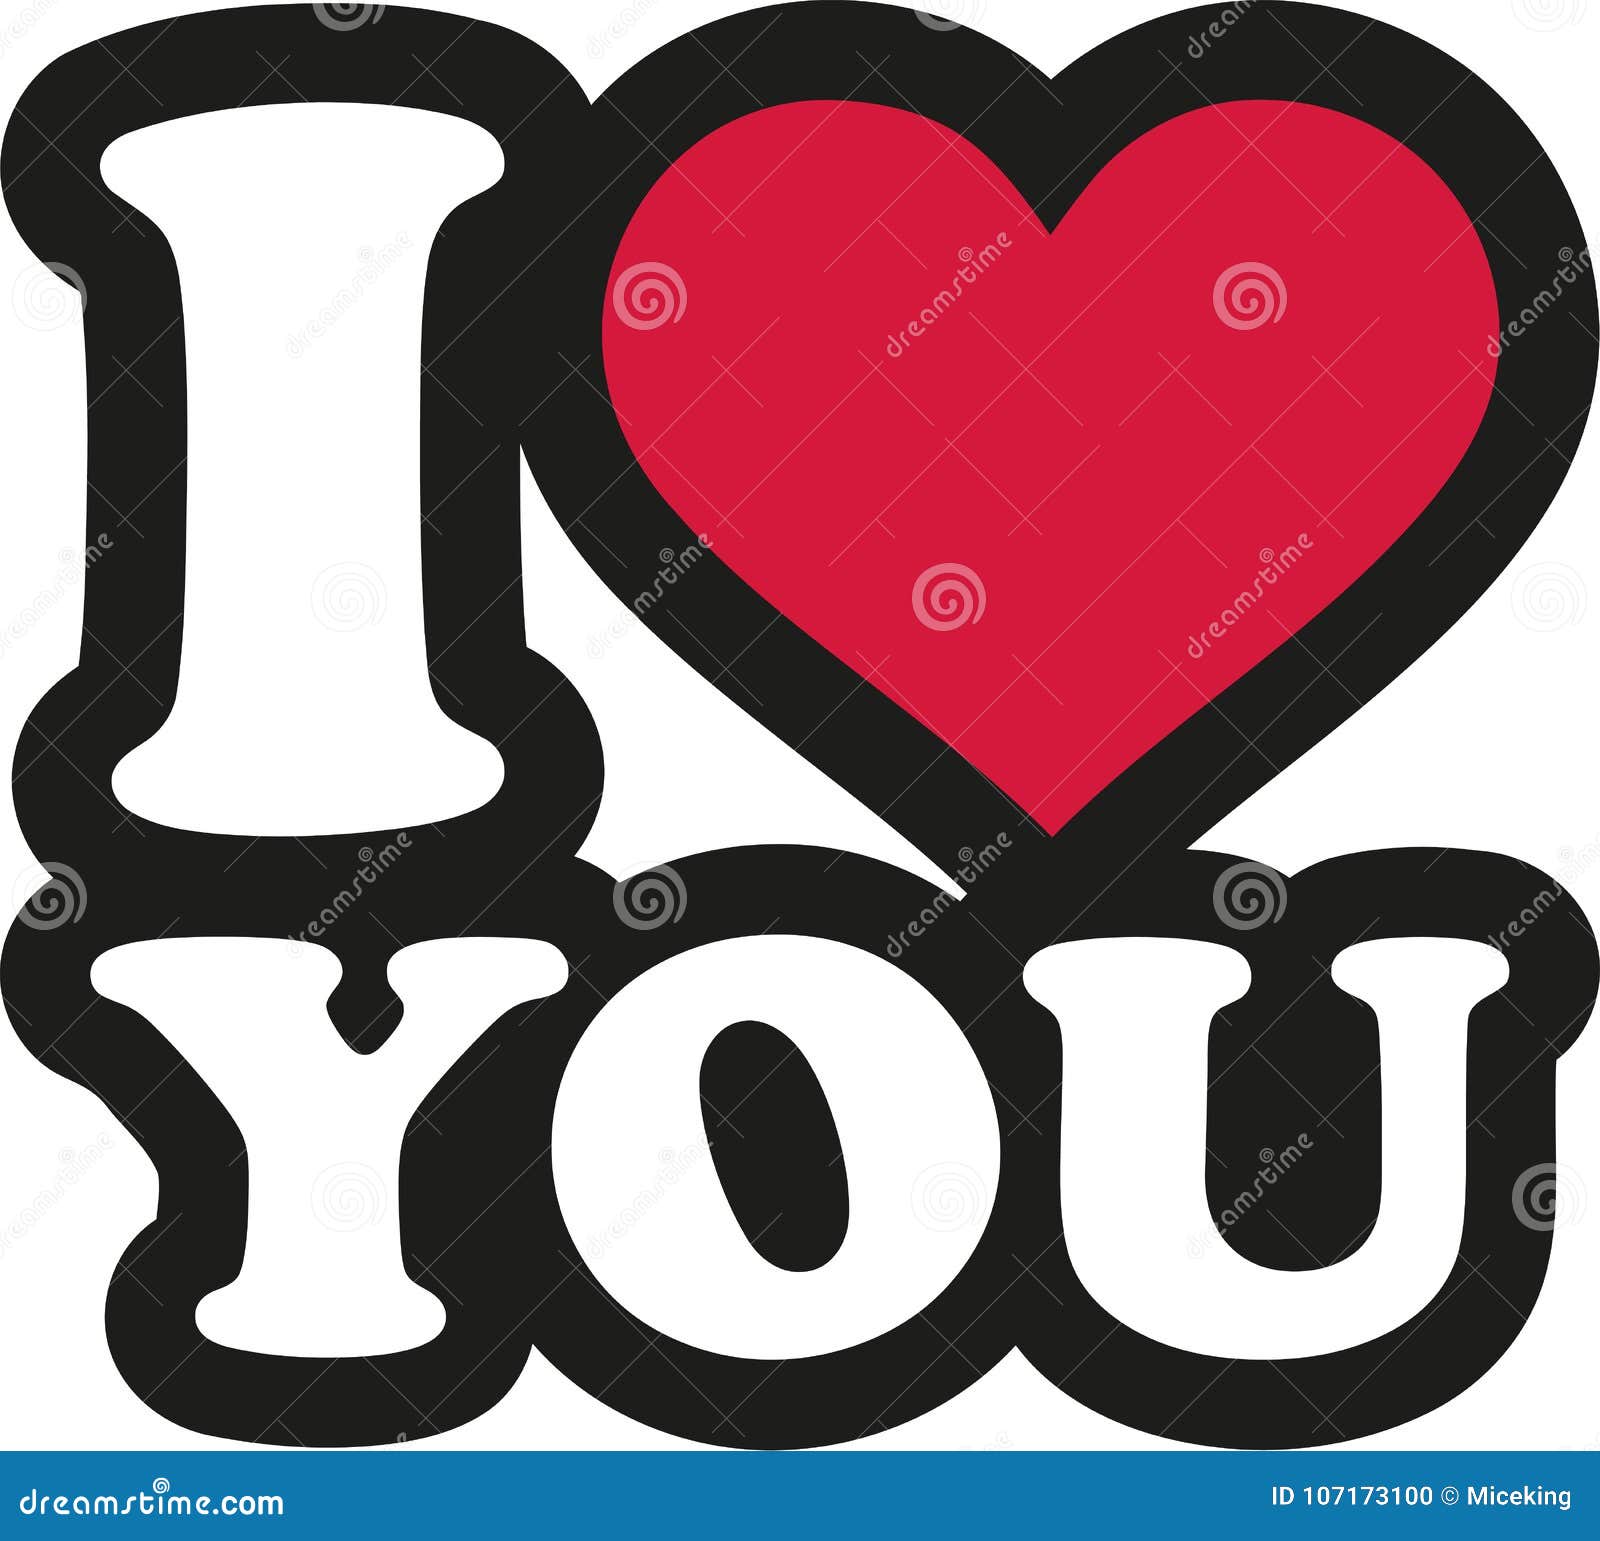 I Love You - Lettering Cartoon Stock Vector - Illustration of romance,  logo: 107173100